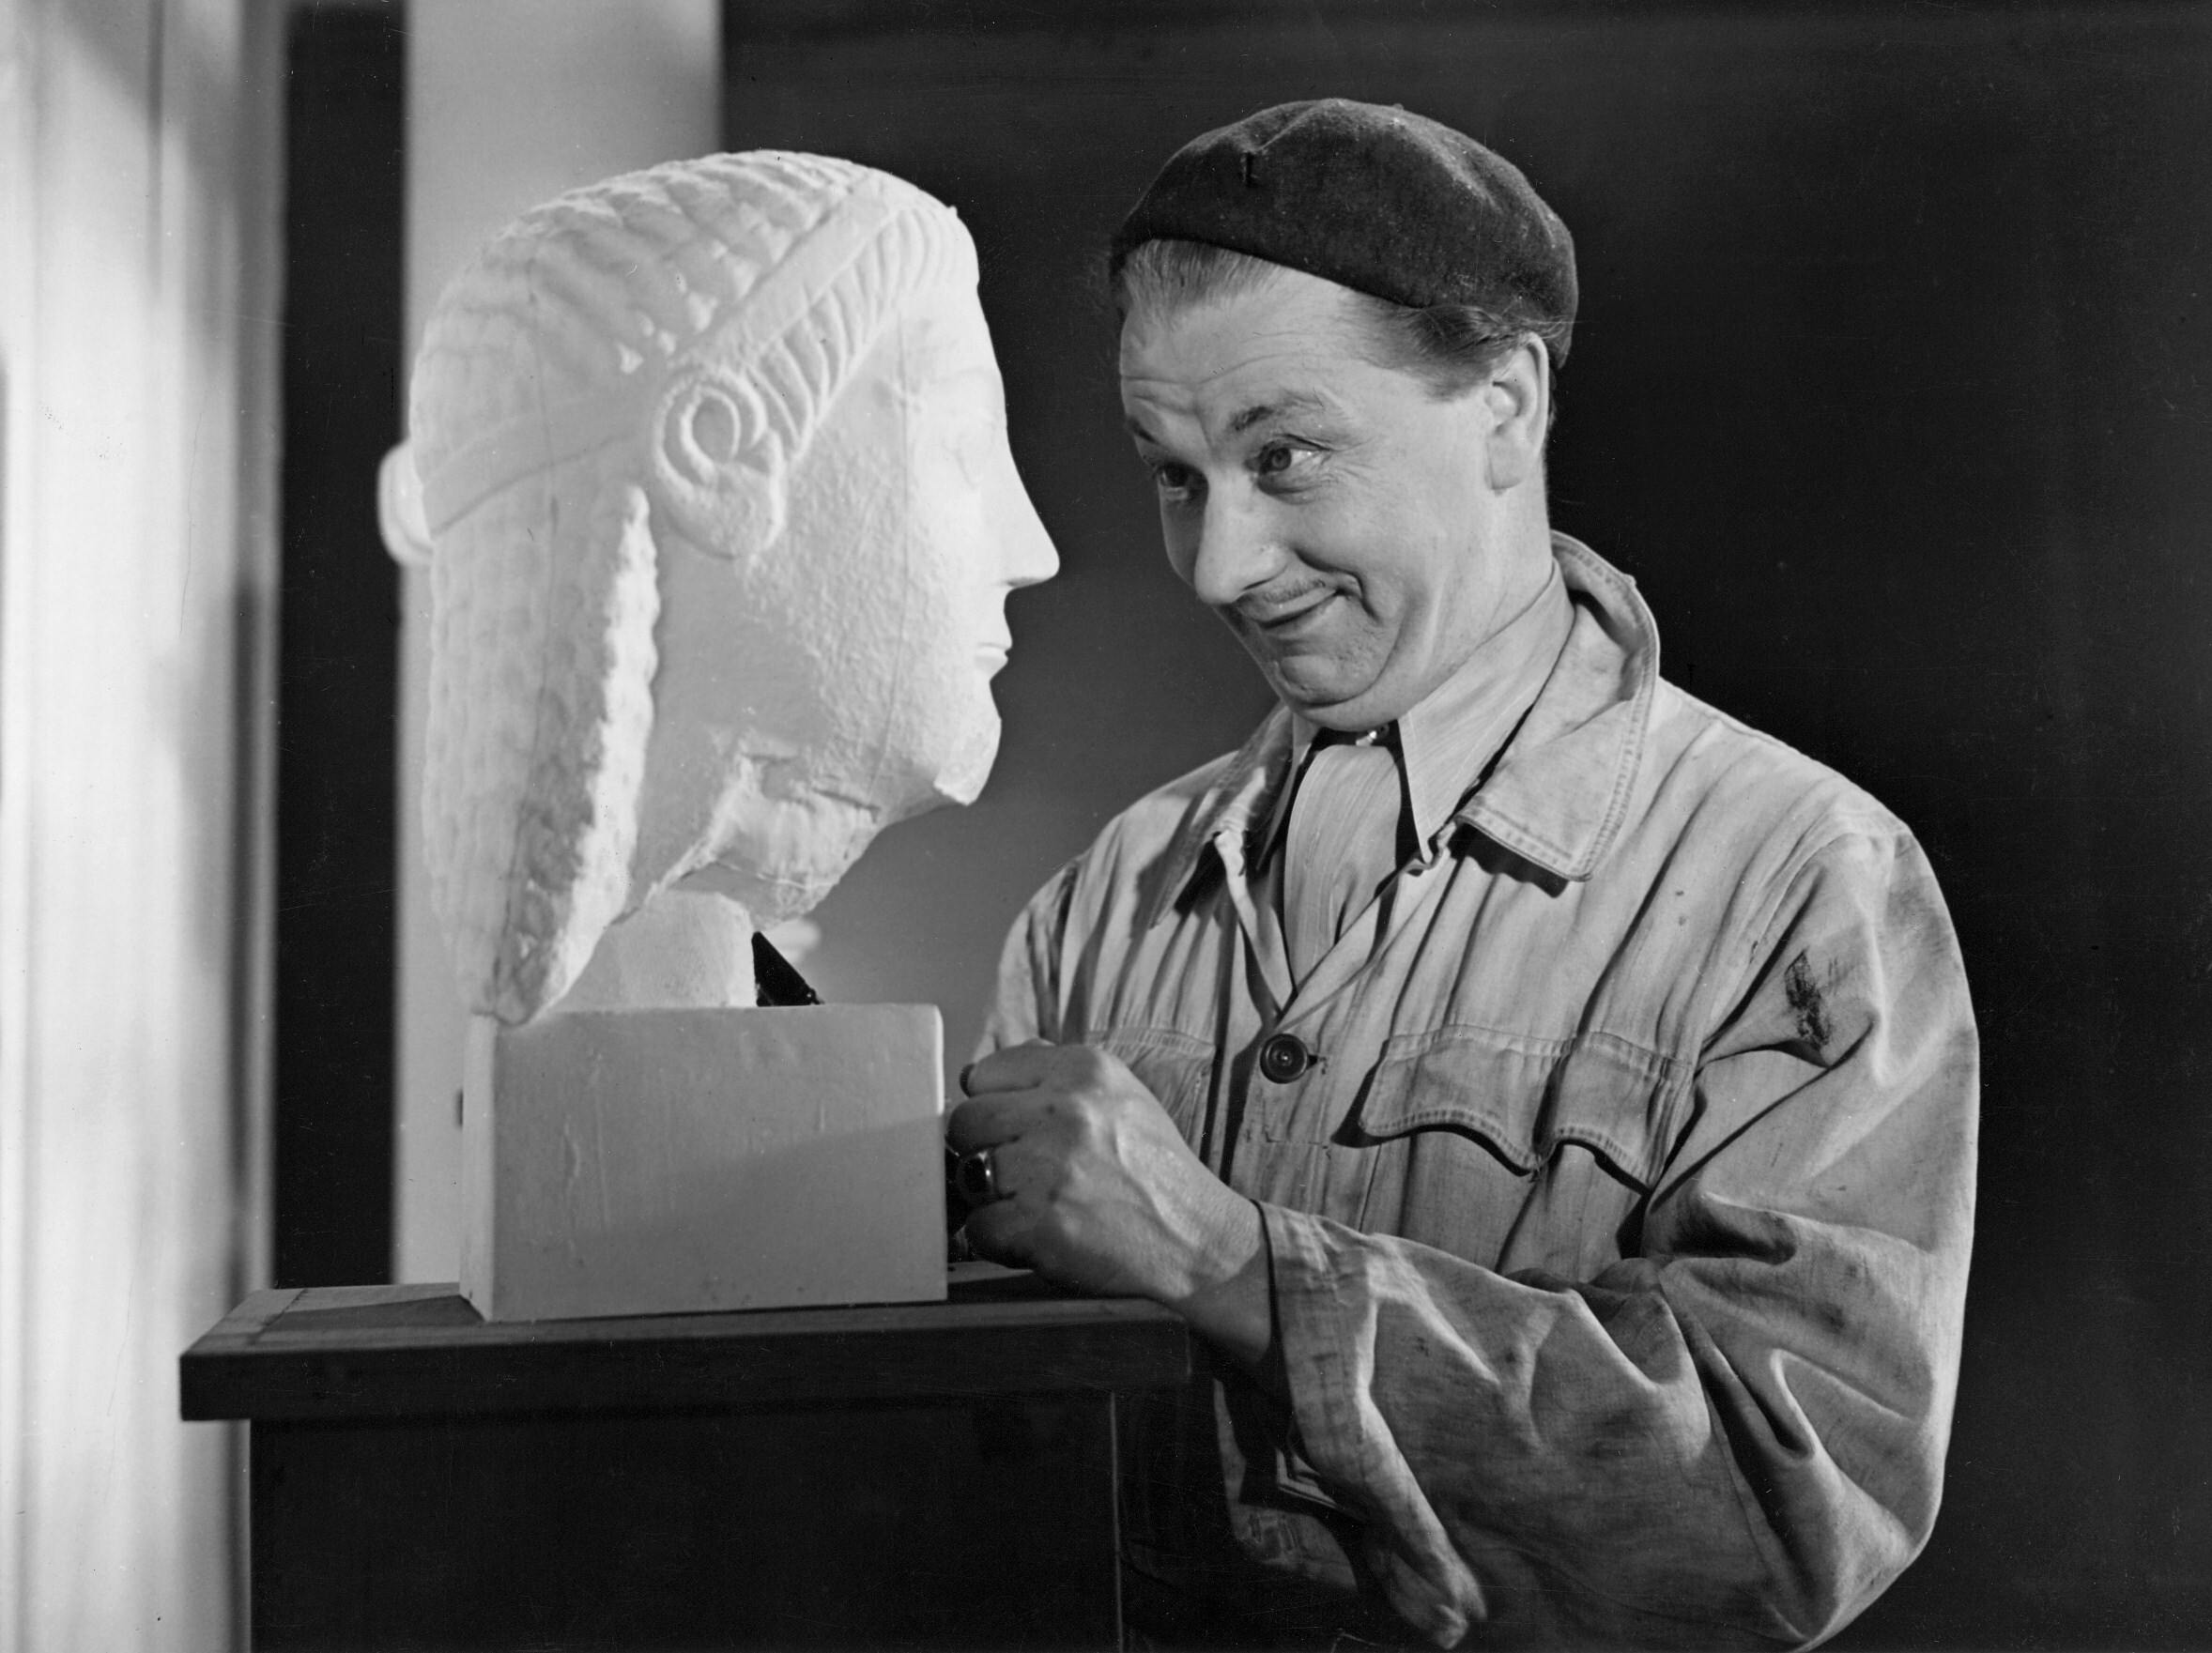 Komikeren Christian Arhoff (1893 - 1973) snakker med en skulptur i filmen "Ballade i Nyhavn".